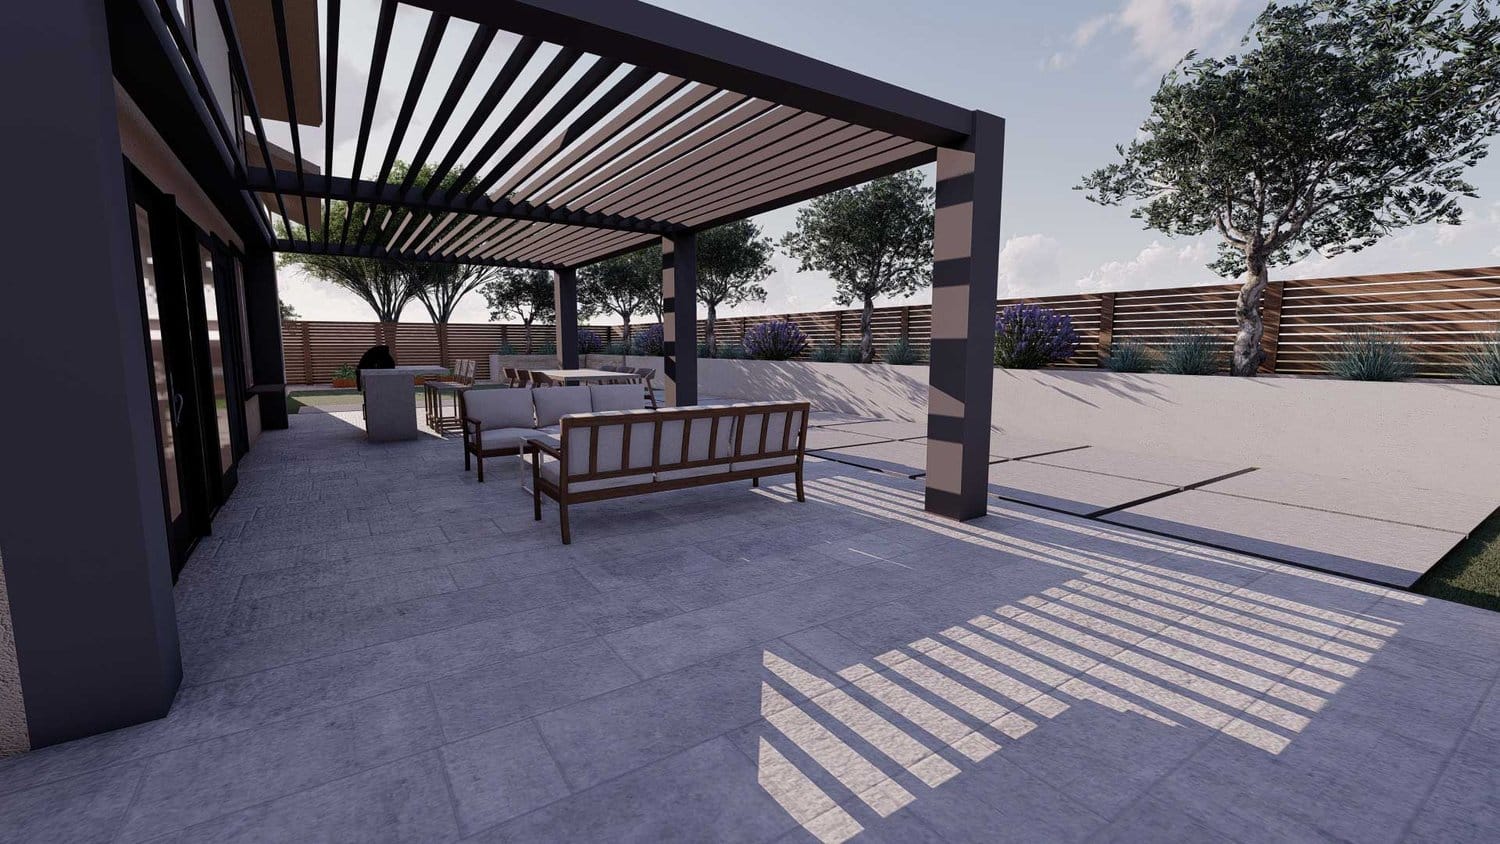 Thousand Oaks yard with pergola over concrete paver patio seating area